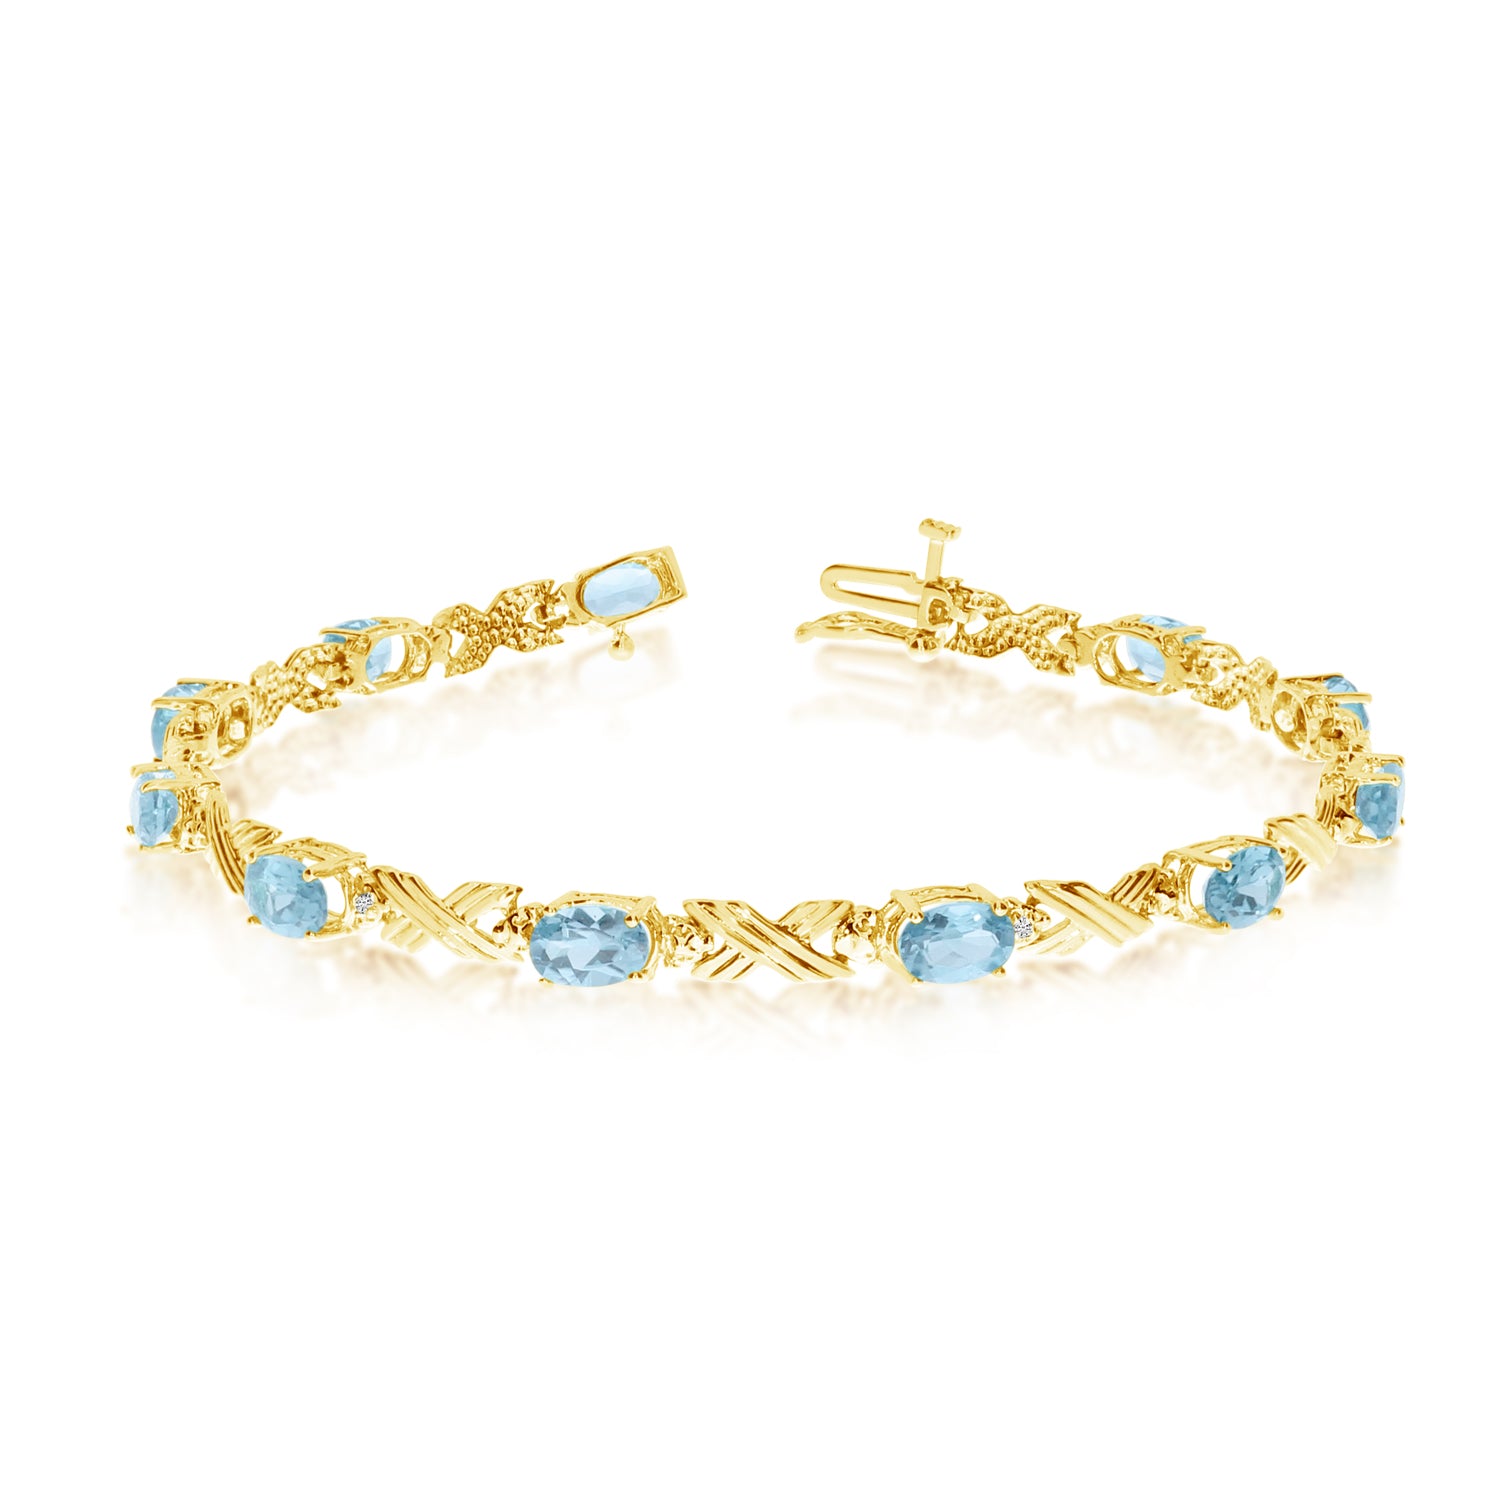 10K Yellow Gold Oval Aquamarine Stones And Diamonds Tennis Bracelet, 7" fine designer jewelry for men and women